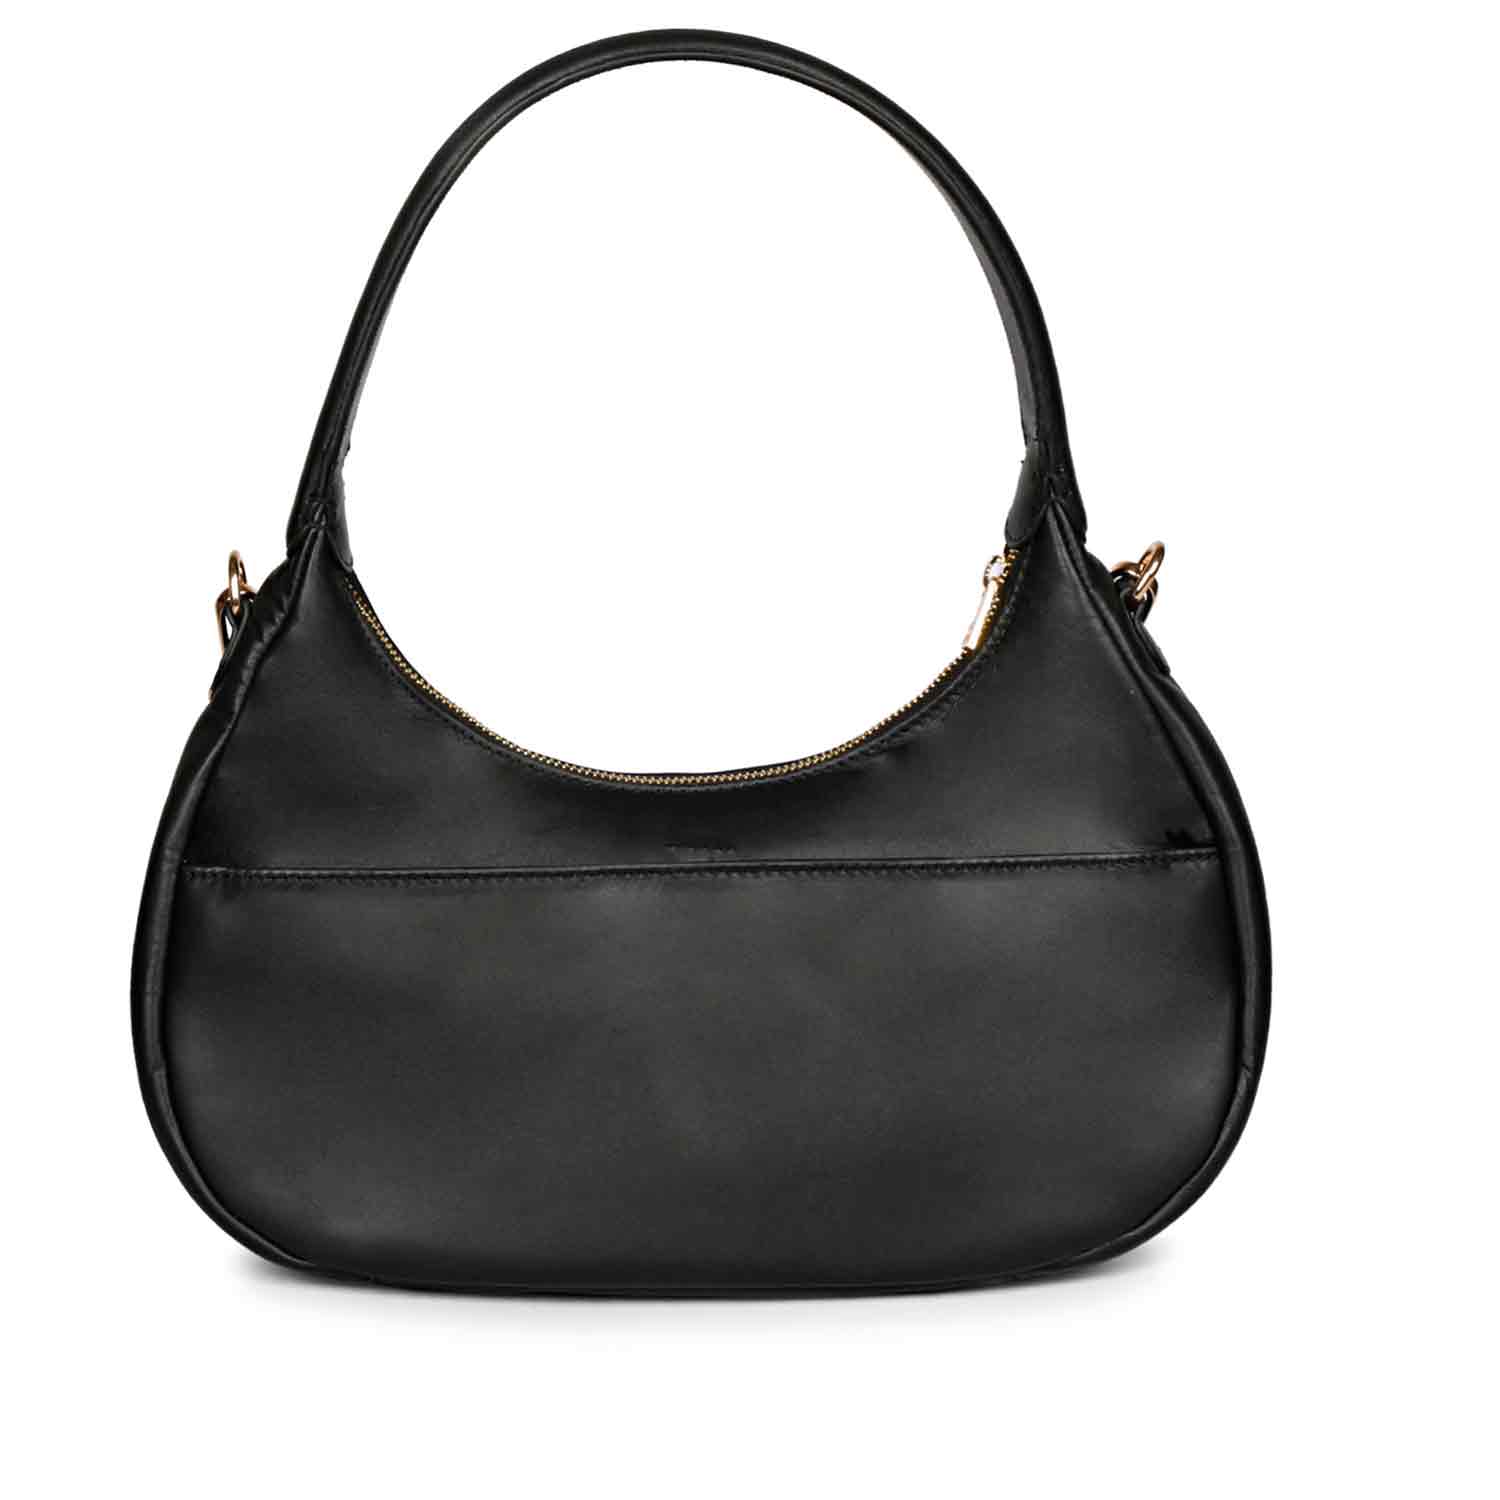 Black Stylish Leather Hobo Bags at best price in Kolkata | ID: 12860236048